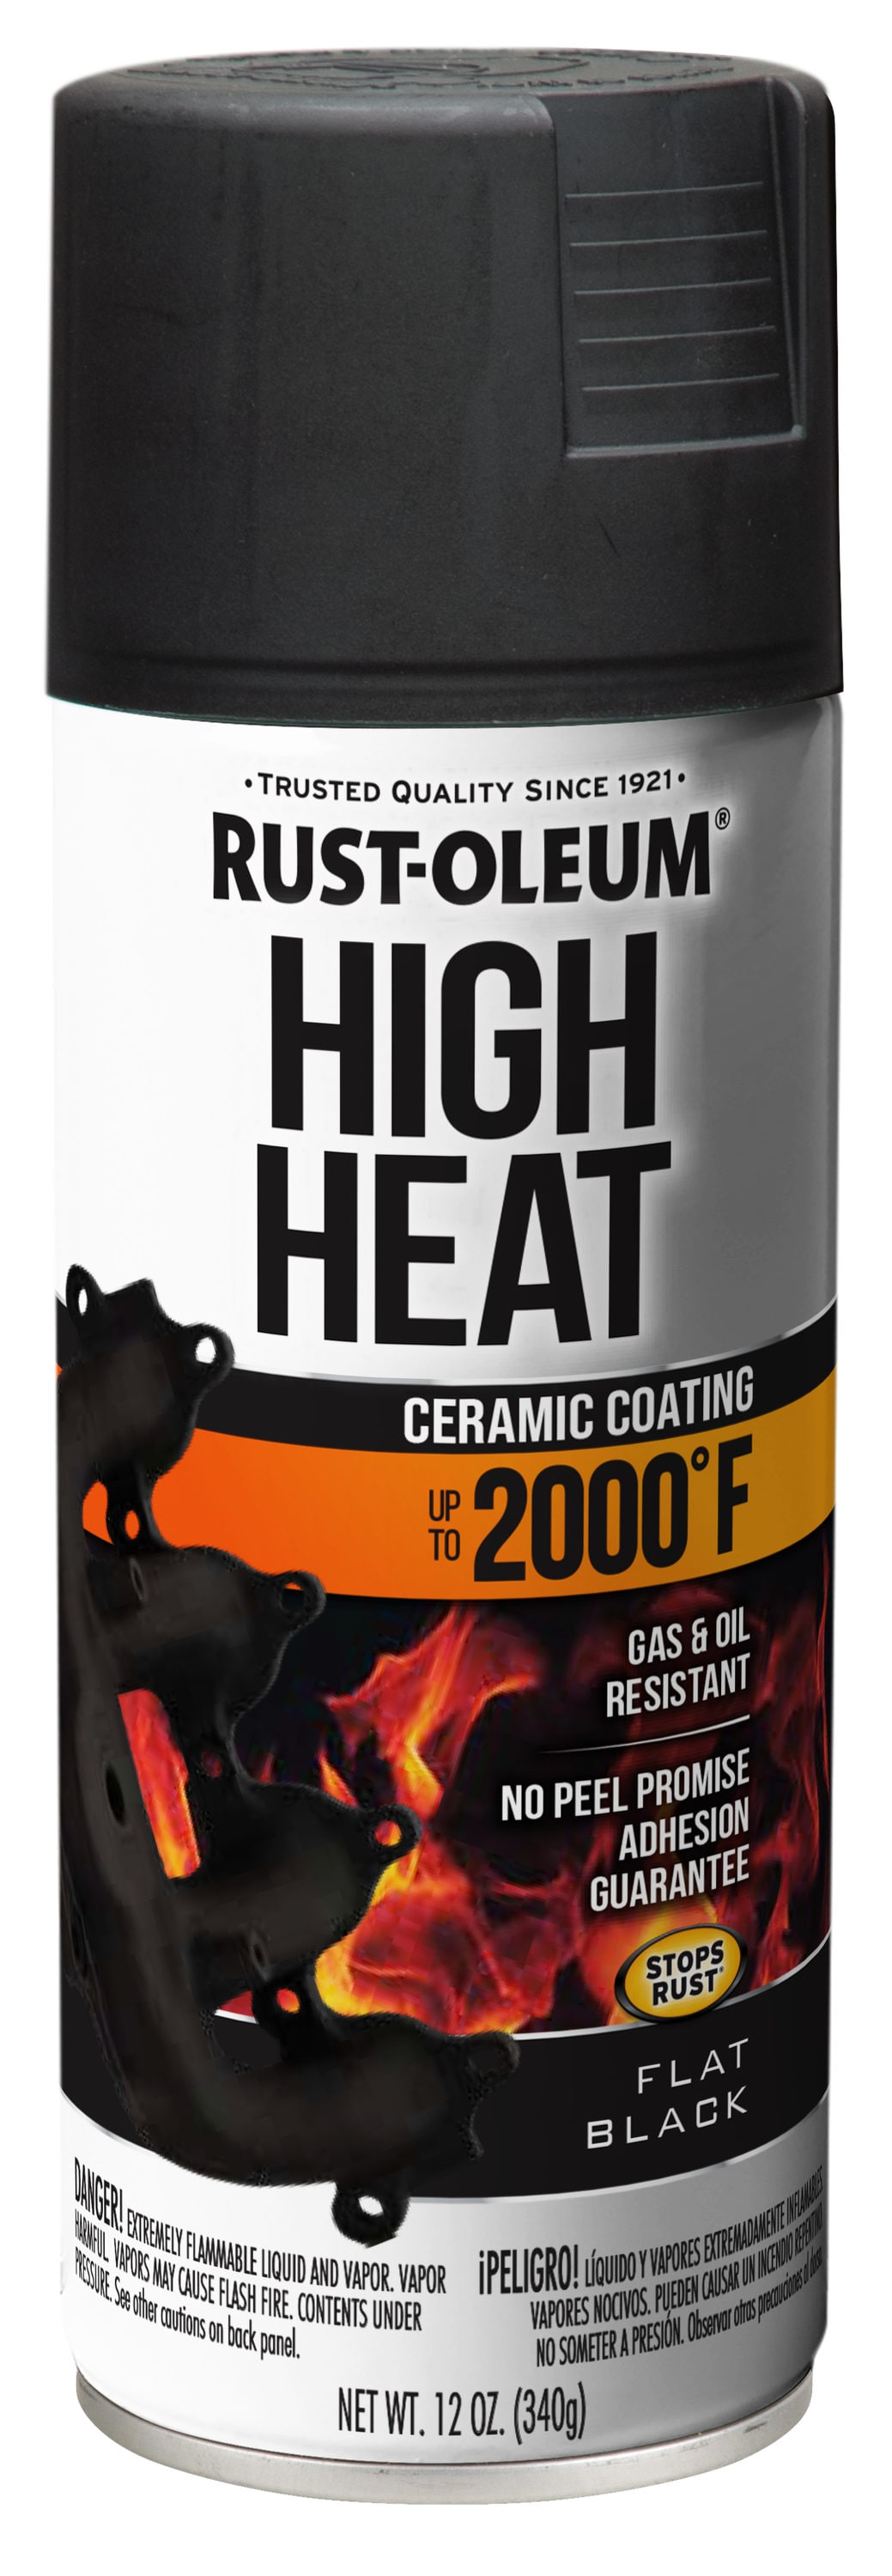 Heat Resistant Paint - High Temperature Paint 600 Degree